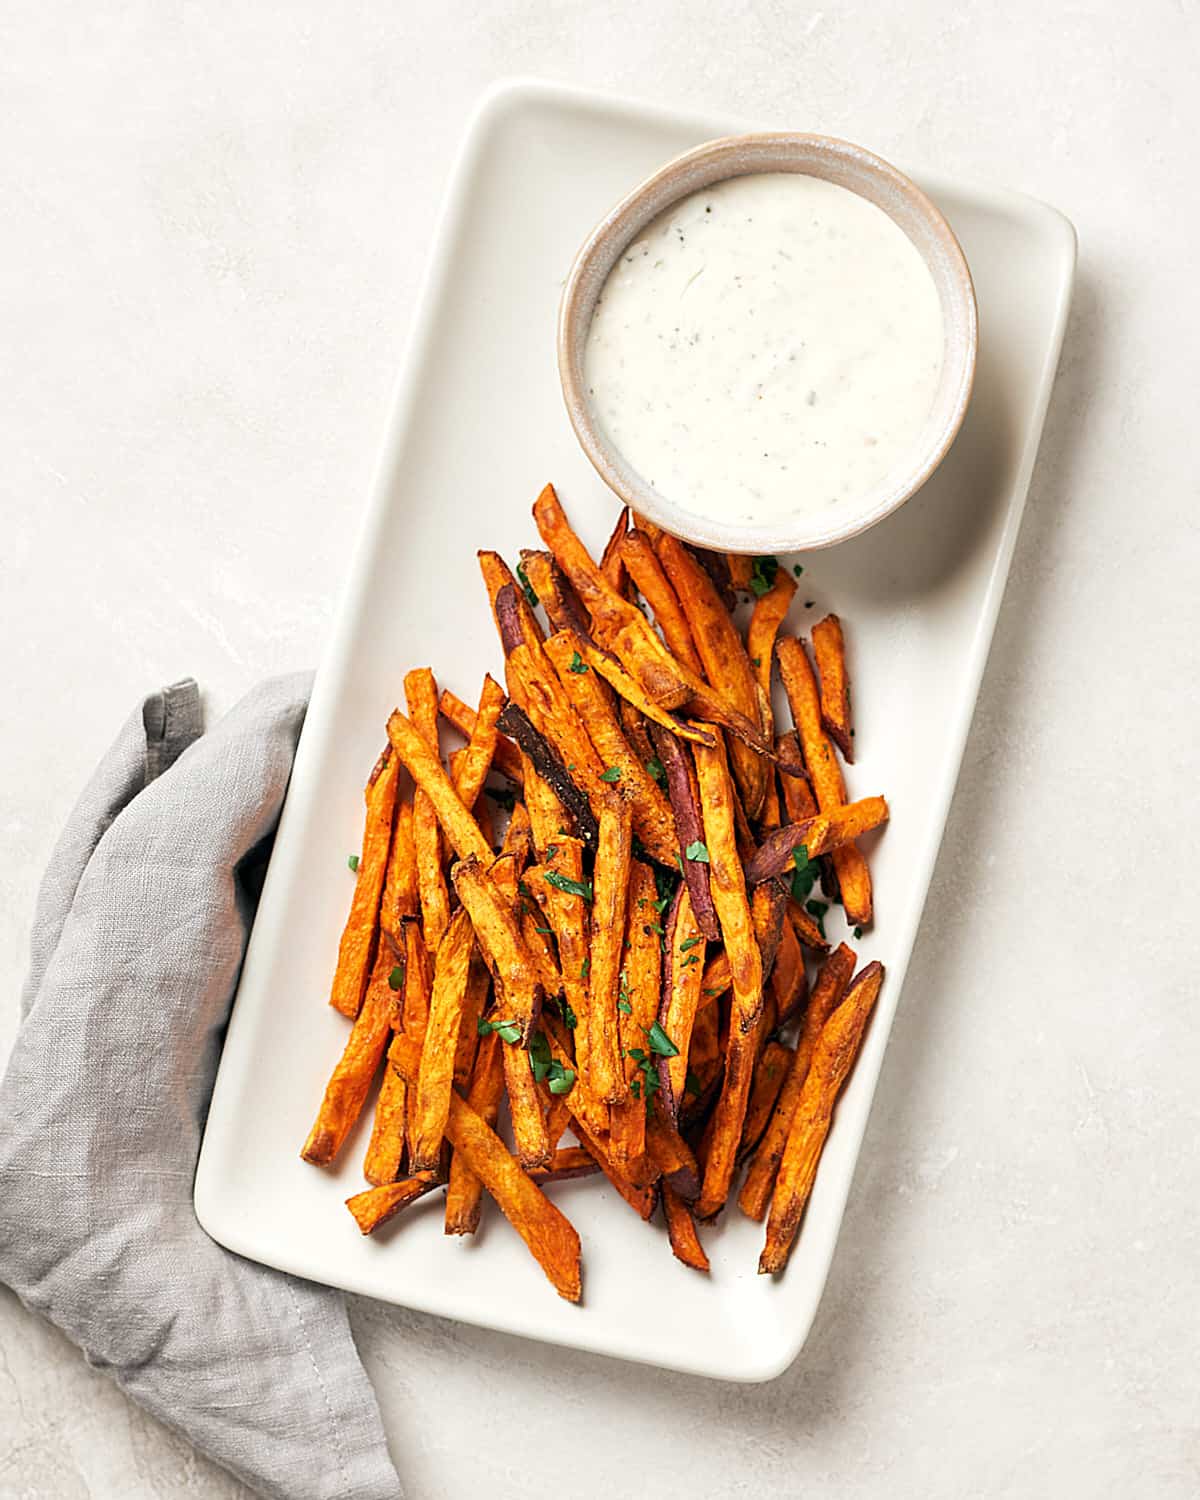 Crispy baked sweet potato fries on white tray with vegan ranch dip